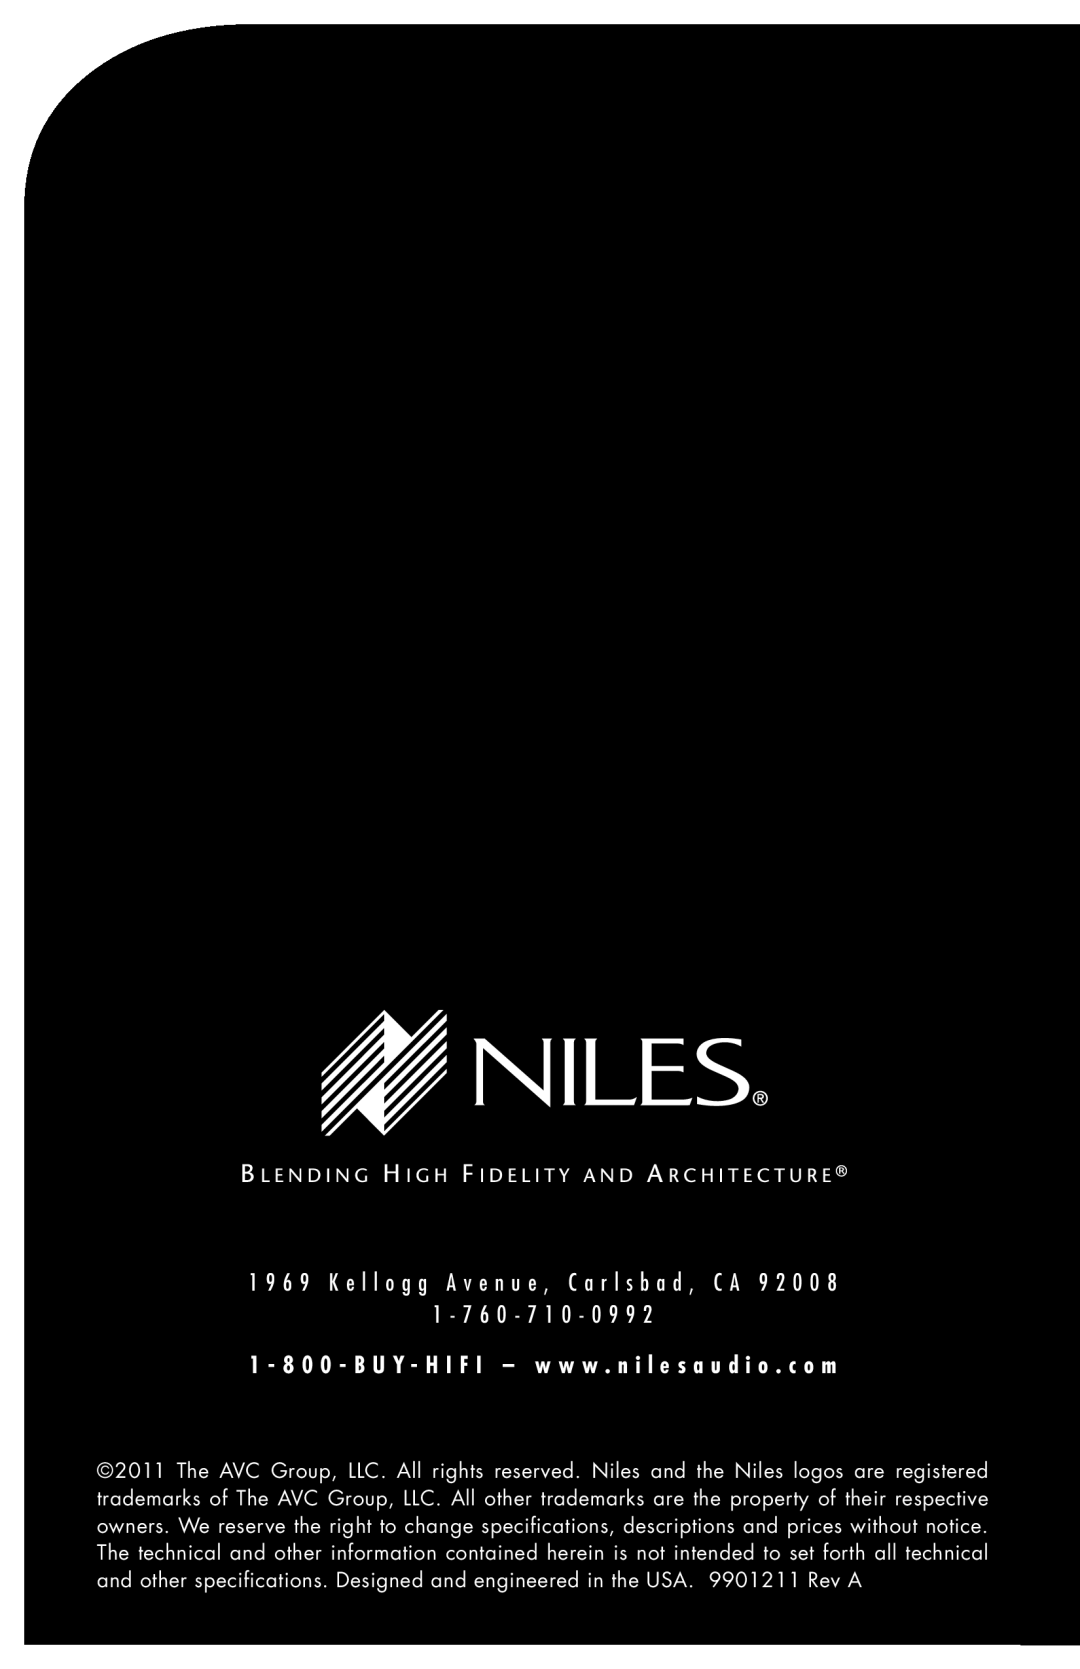 Niles Audio GSS10 manual 1 - 7 6 0 - 7 1 0 - 0 9 